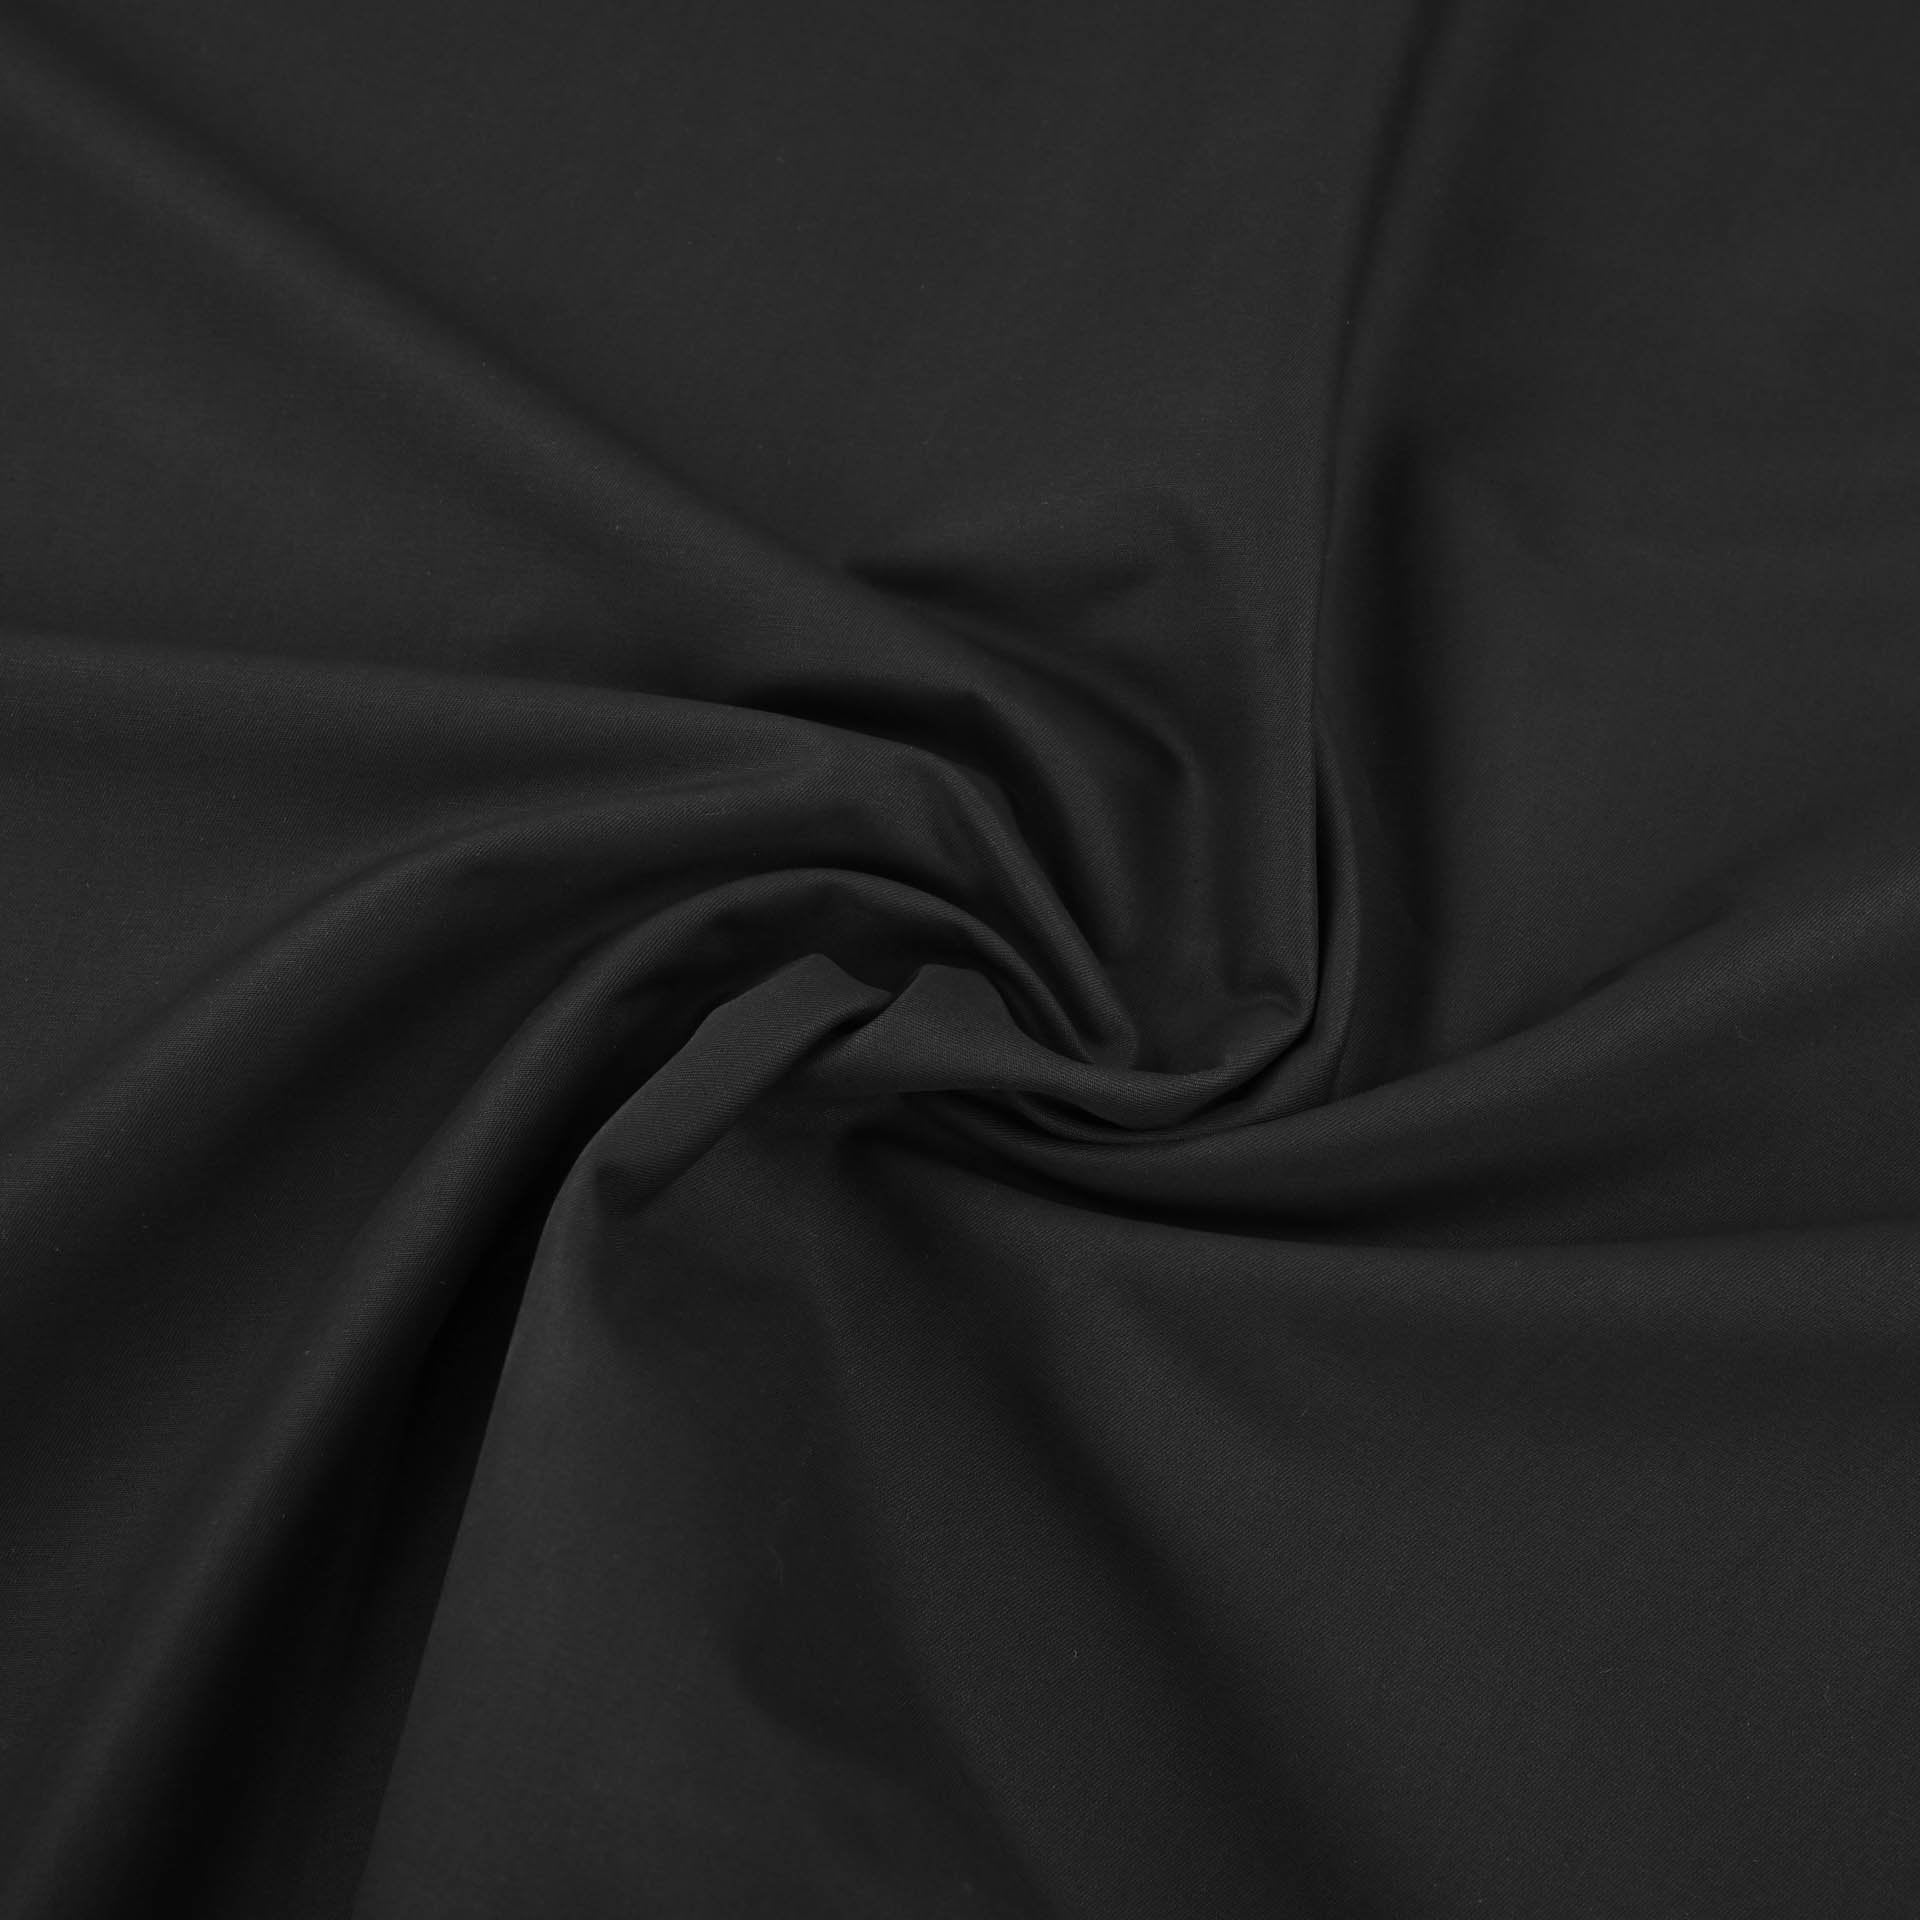 Black Gabardine Fabric 3113